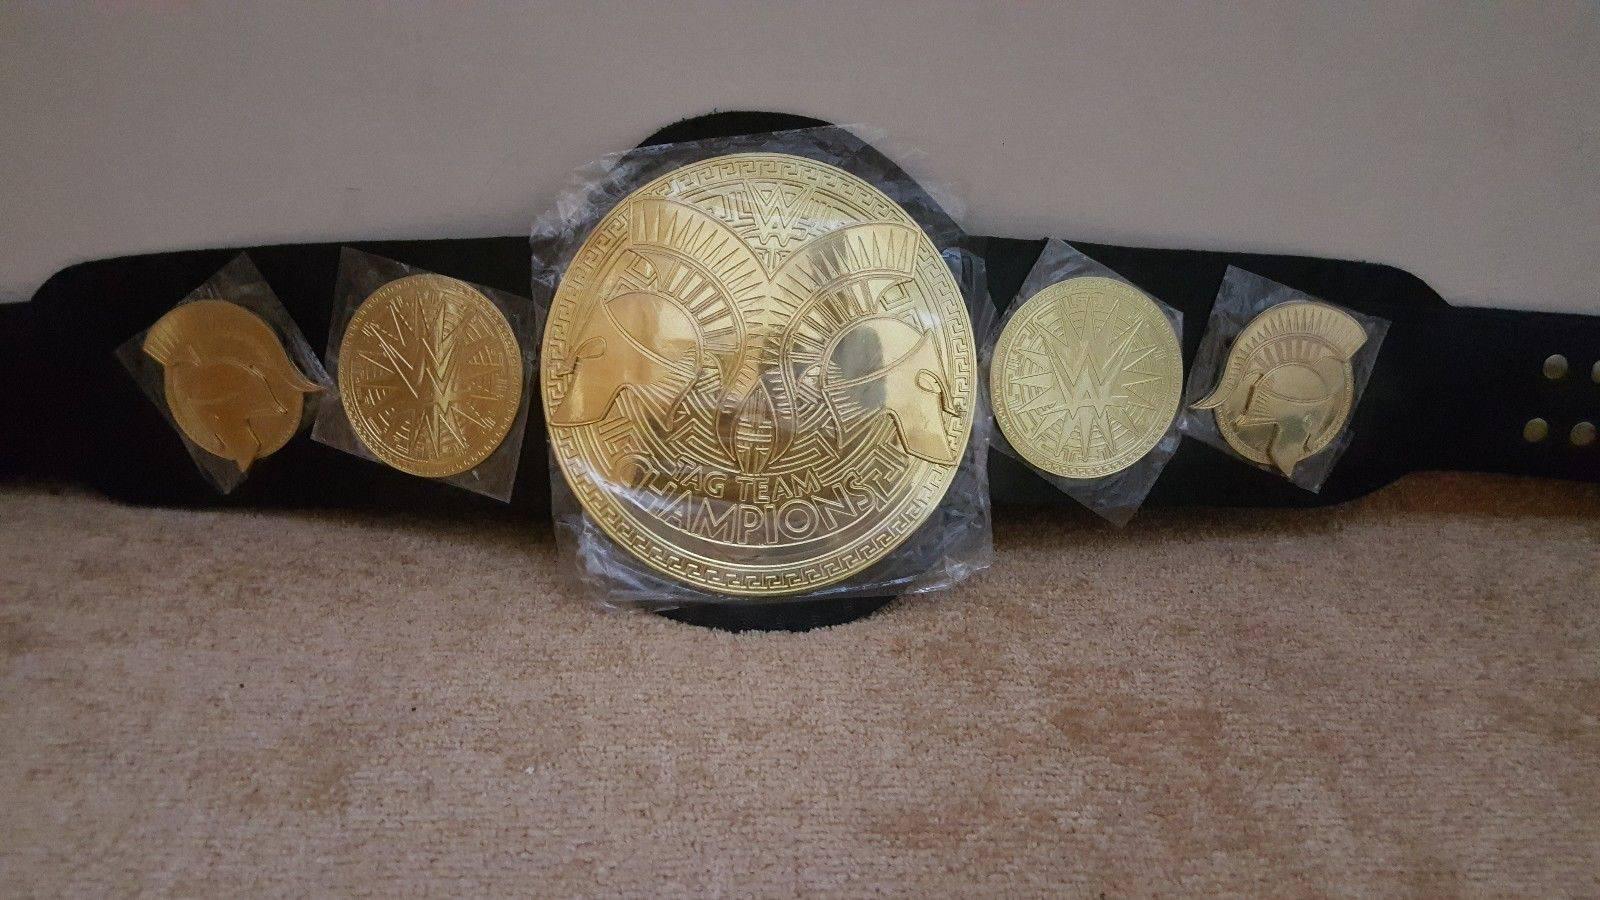 WWE WORLD TAG TEAM Brass Championship Title Belt - Zees Belts